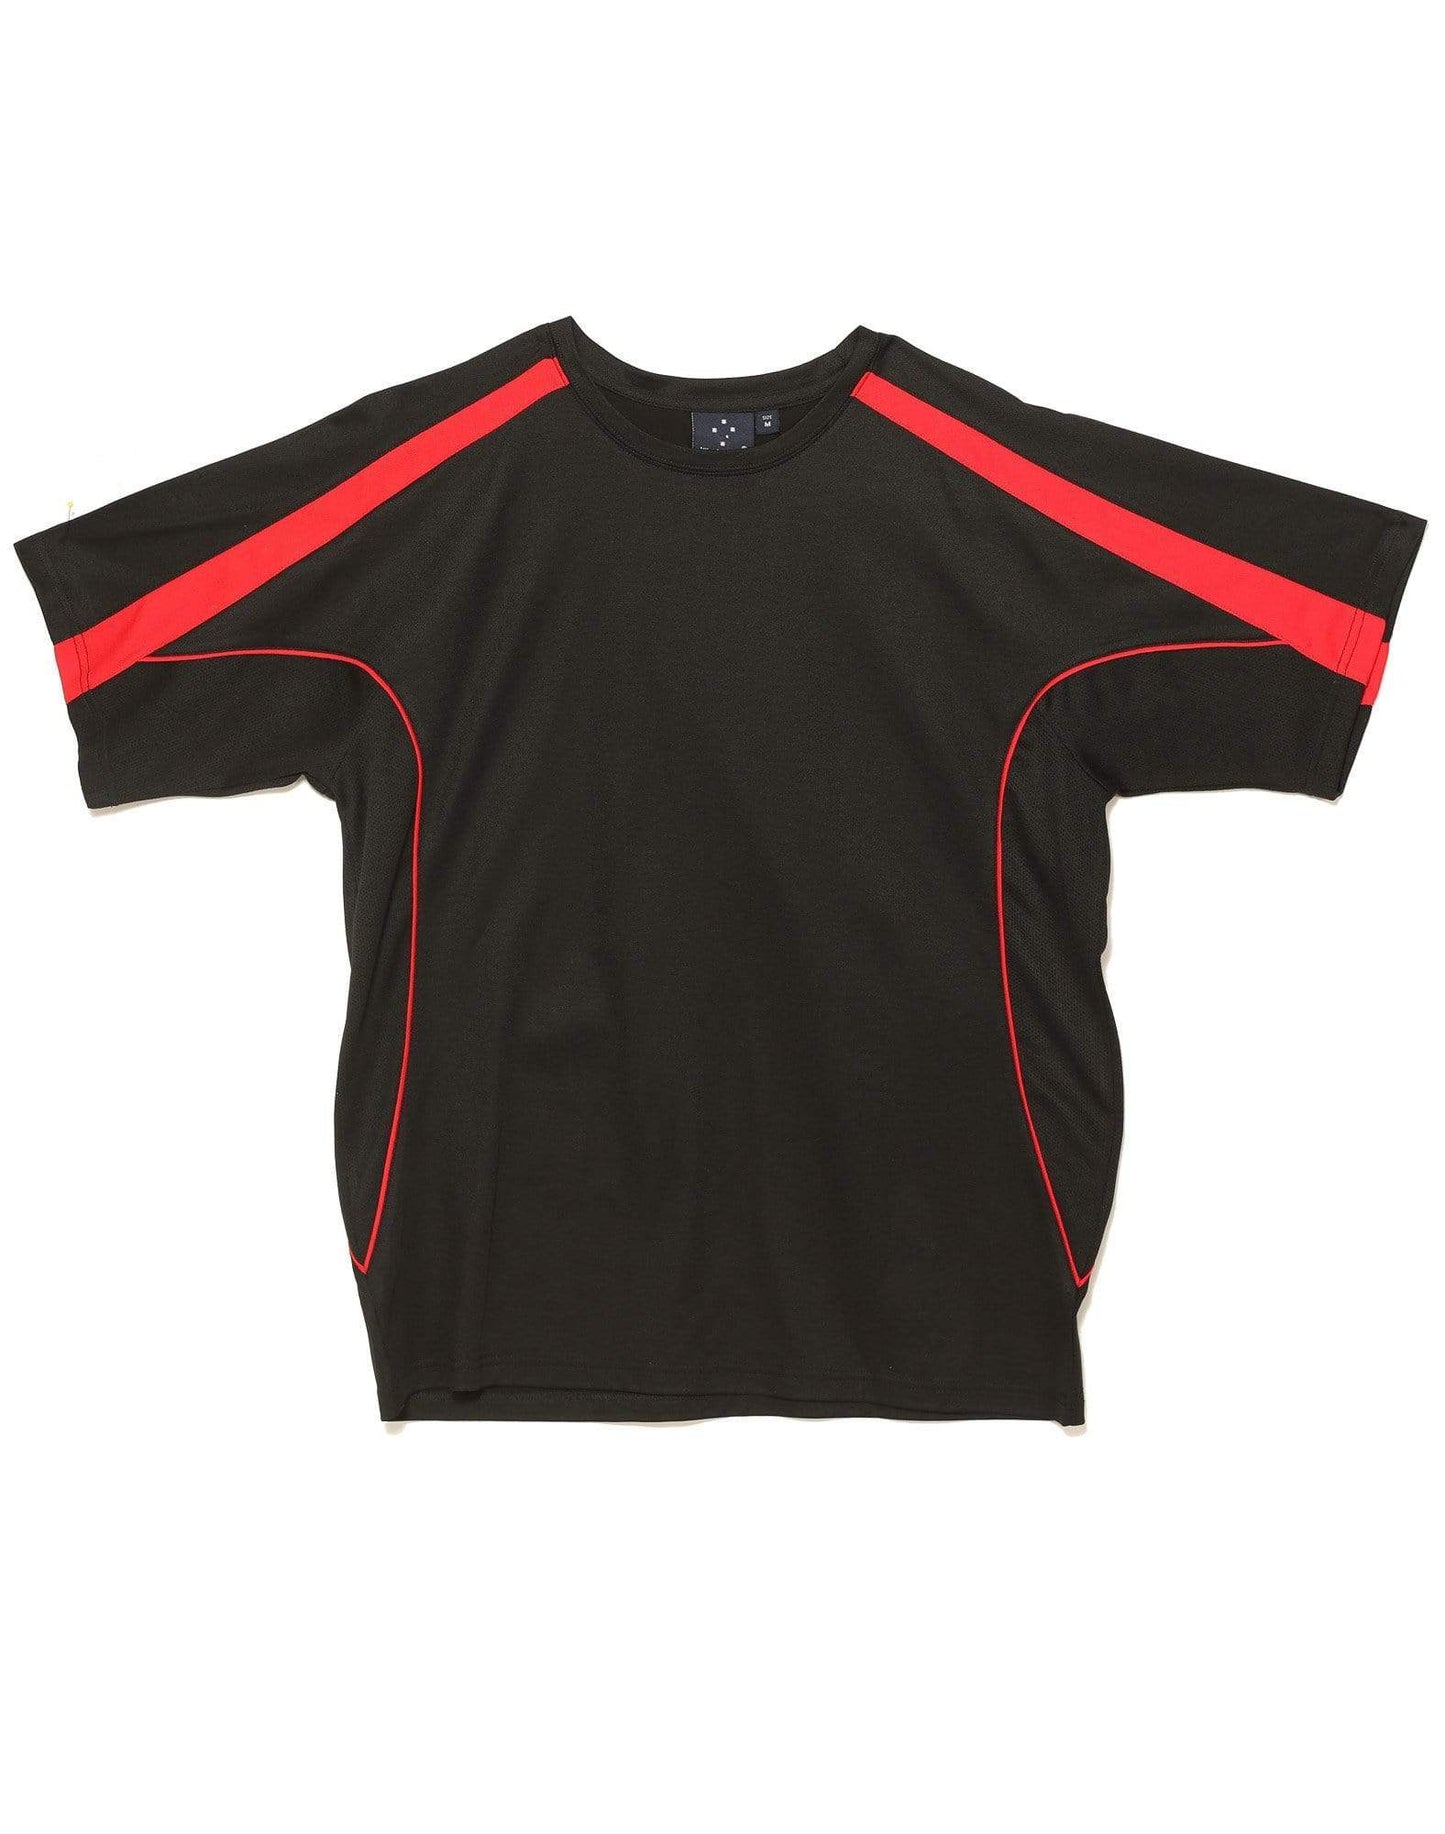 Legend Tee Shirt Kids Ts53k Casual Wear Winning Spirit Black/Red 4K 